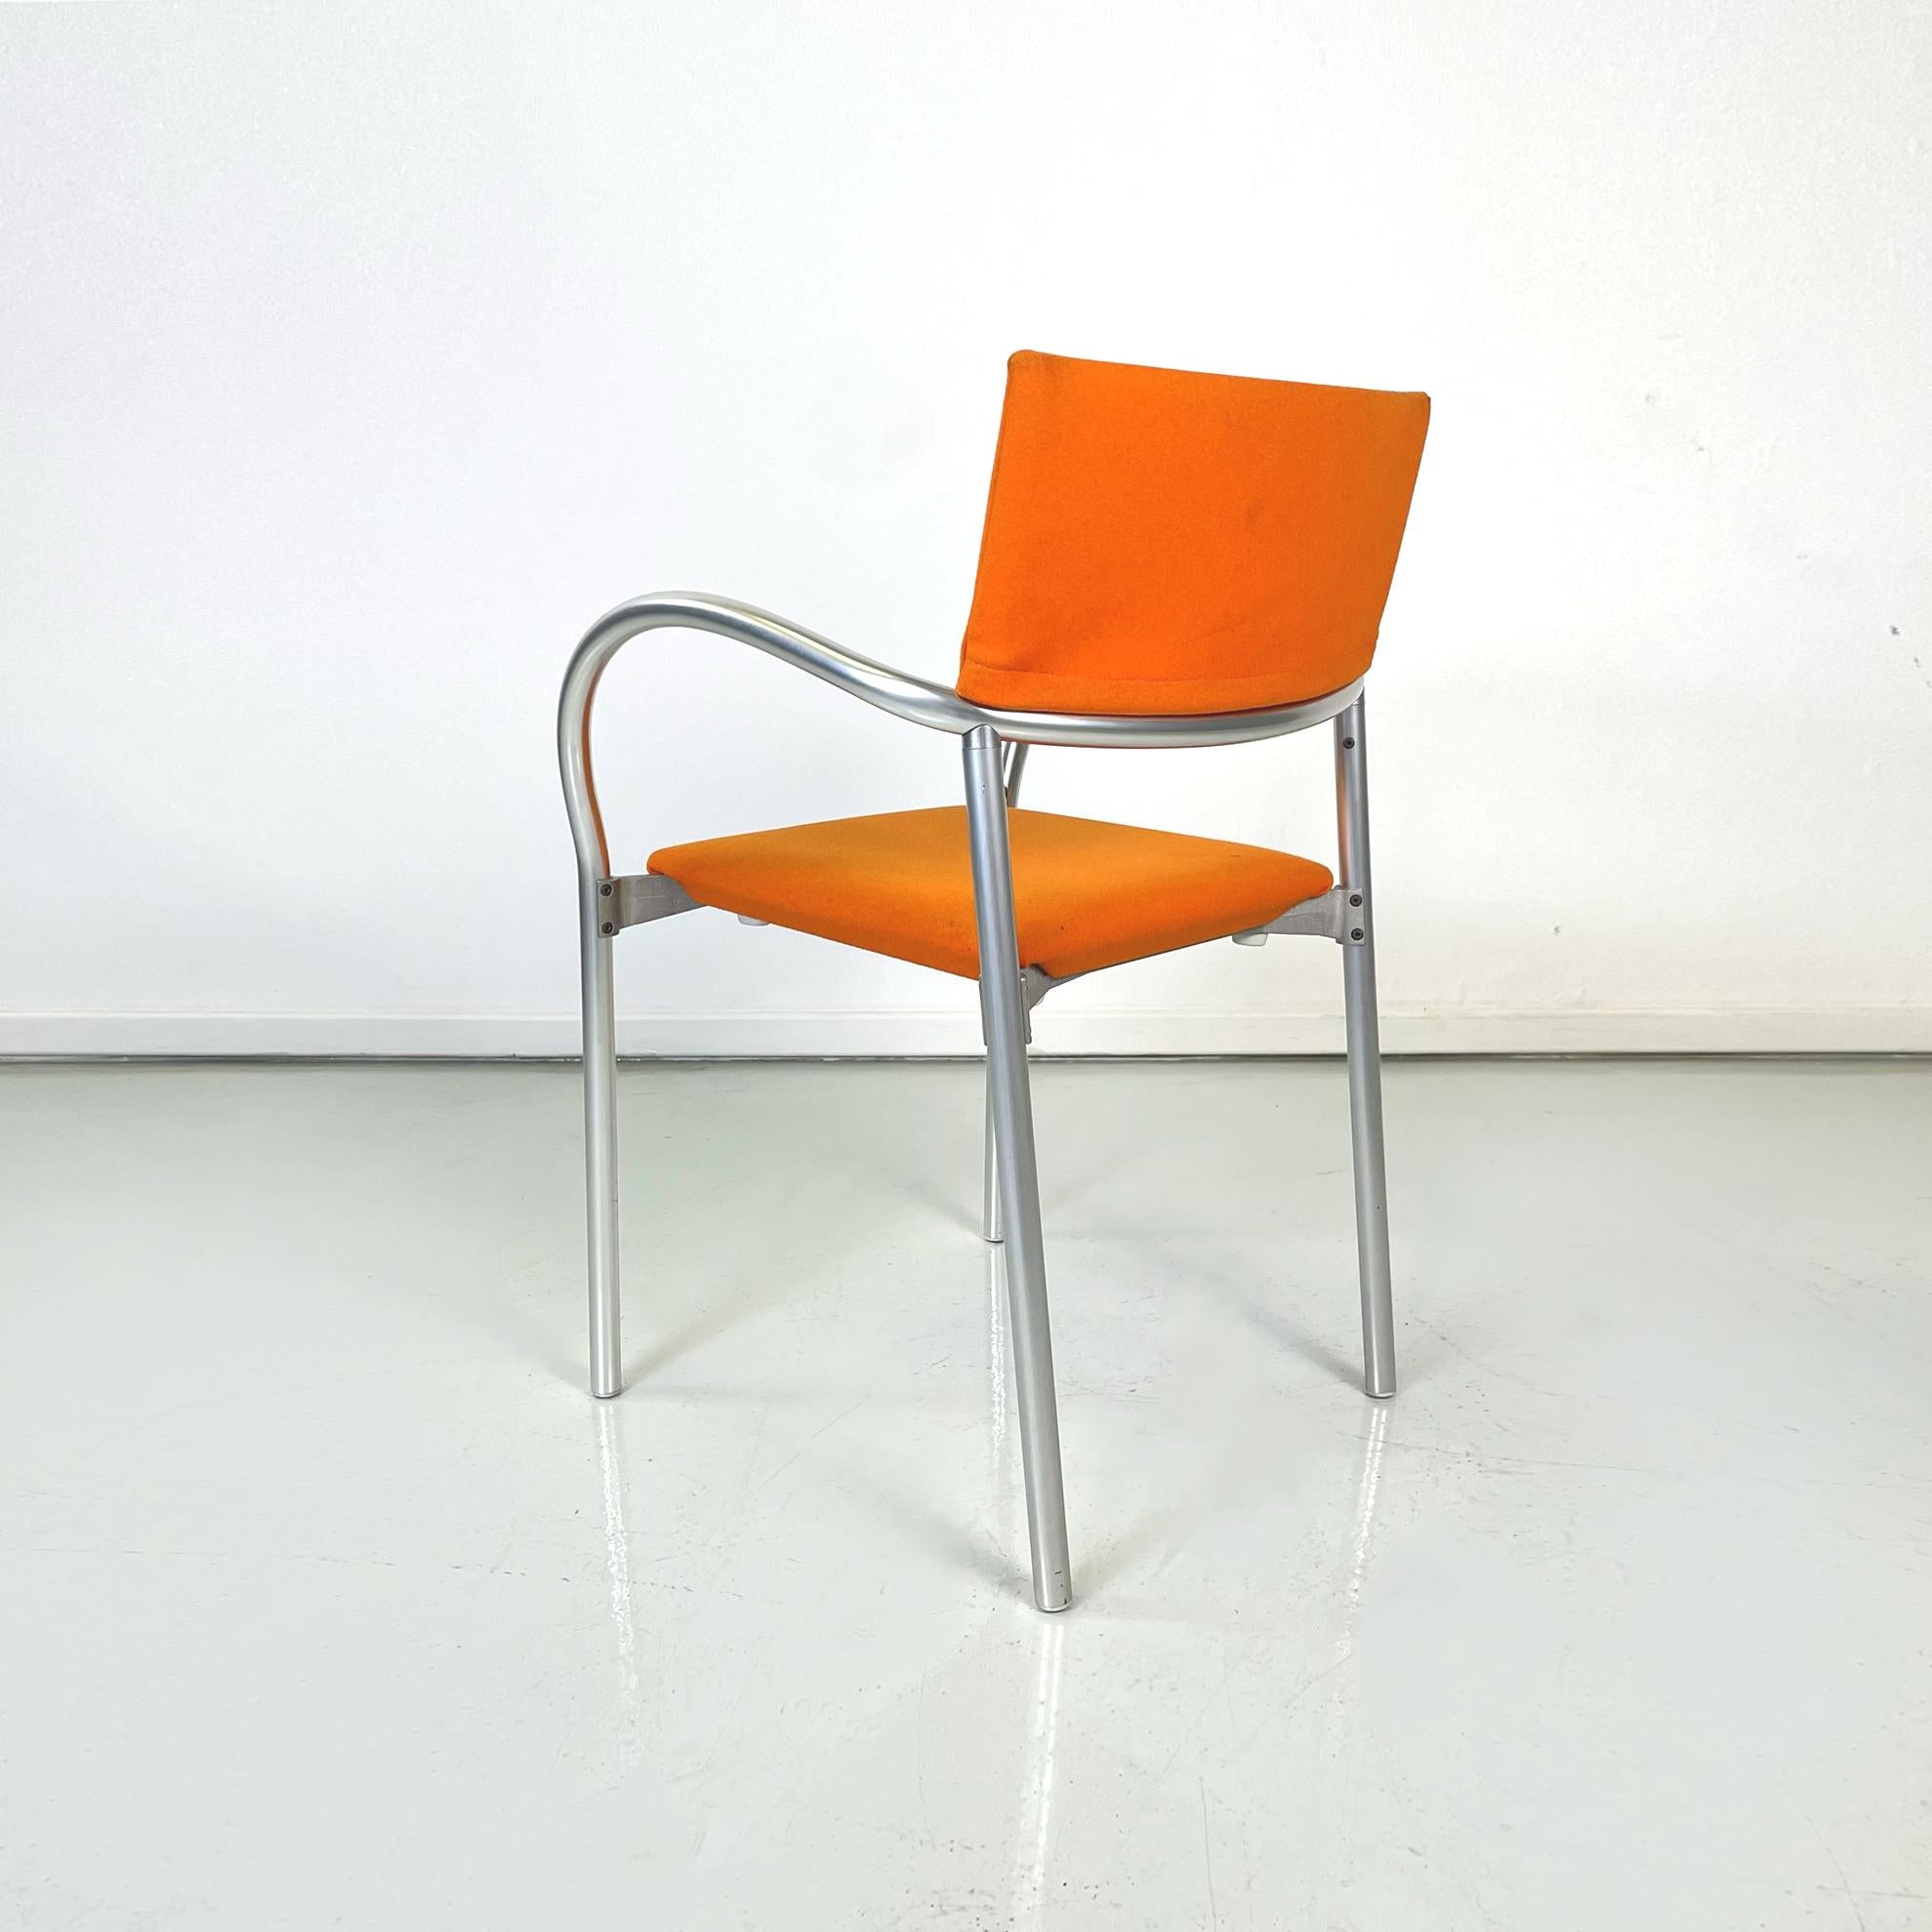 Aluminum Italian Modern Orange Fabric Chairs Mod, Breeze by Bartoli for Segis, 1980s For Sale